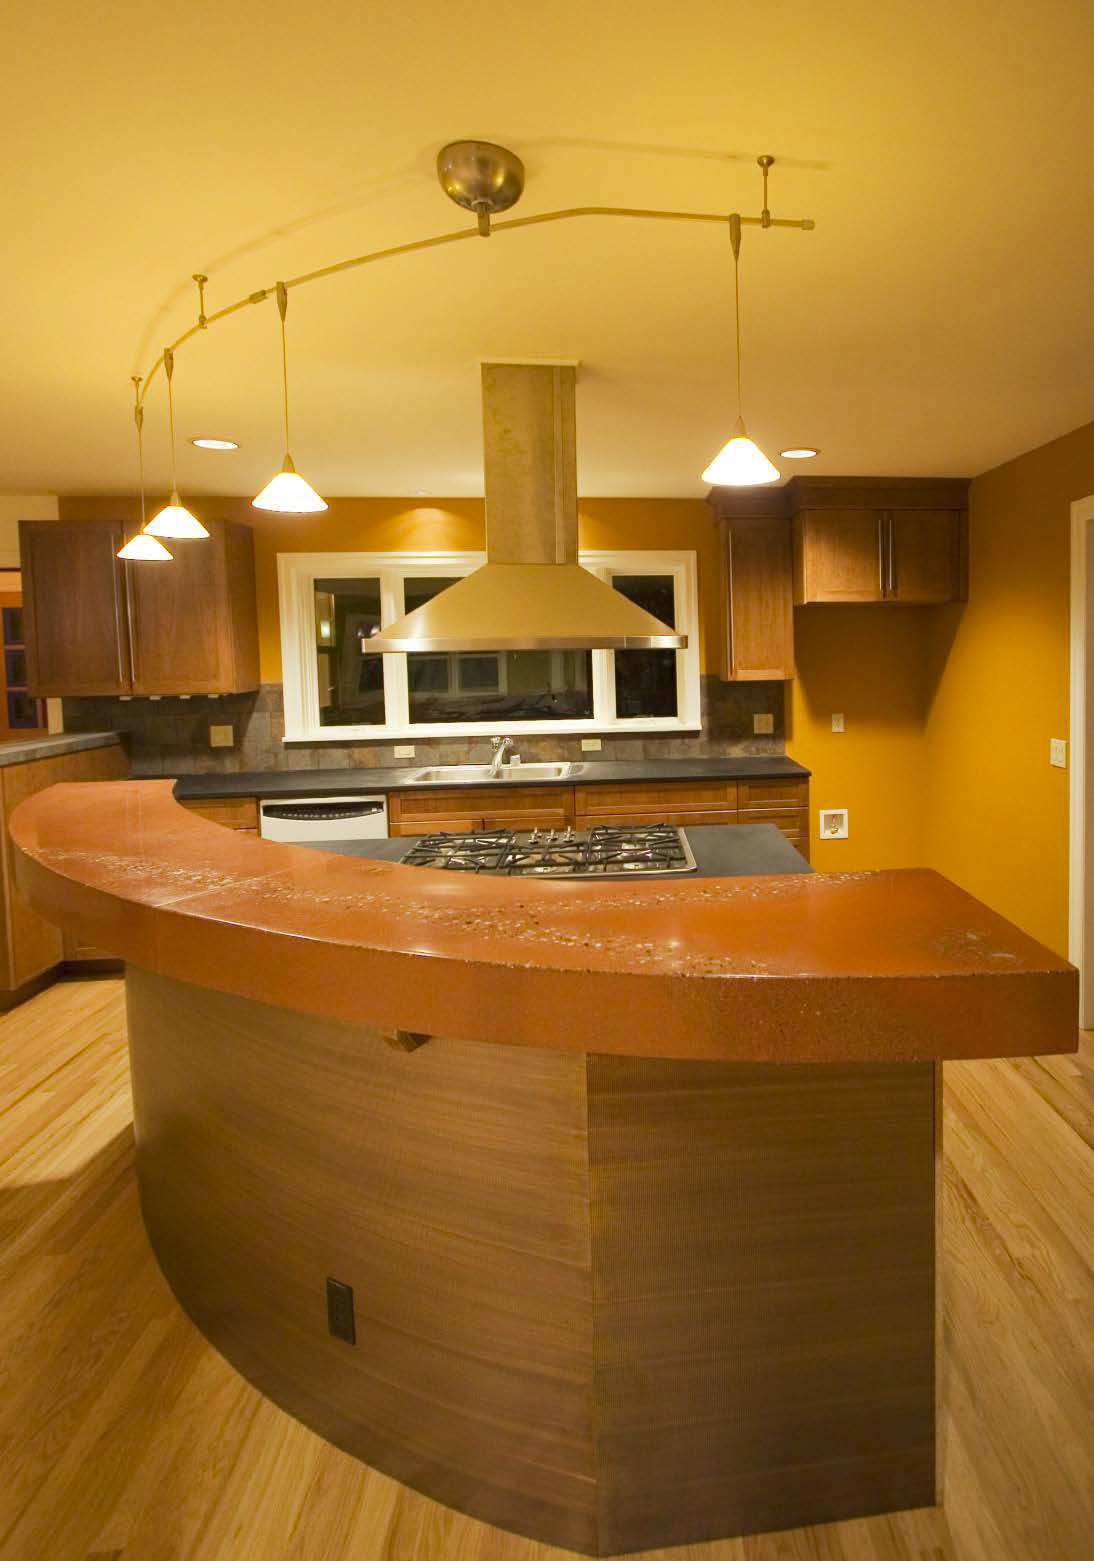 Orange concrete countertop creates a warm kitchen bar.